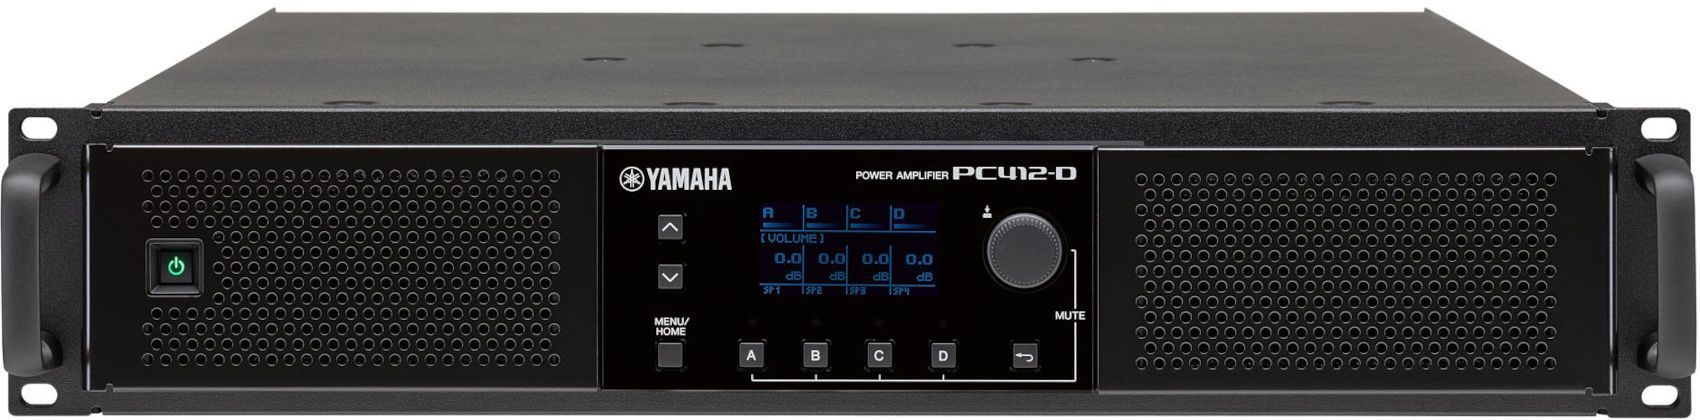 Yamaha PC412-D - фото 2